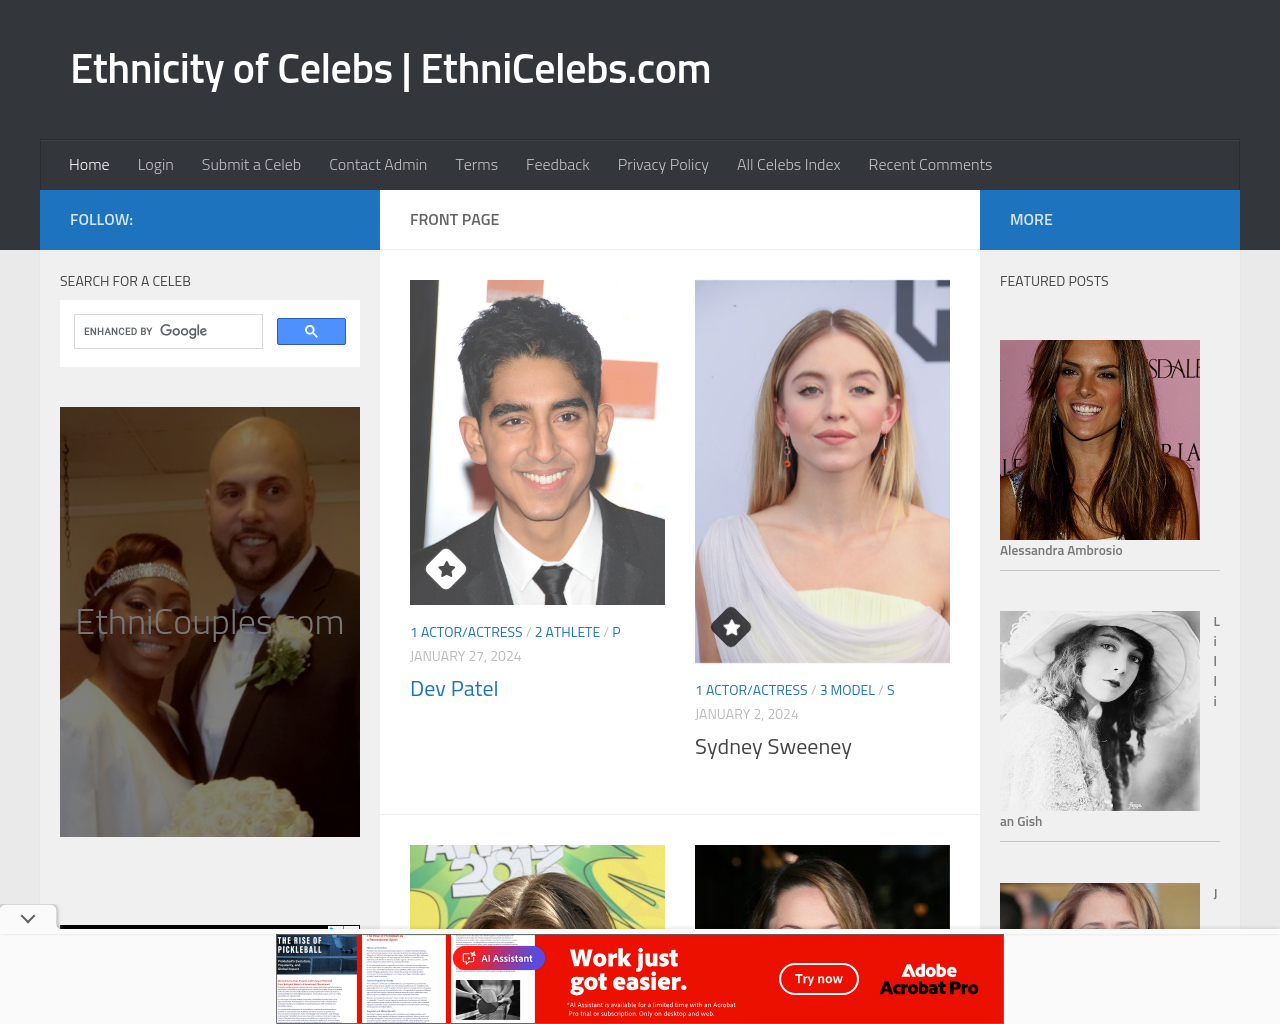 ethnicelebs.com